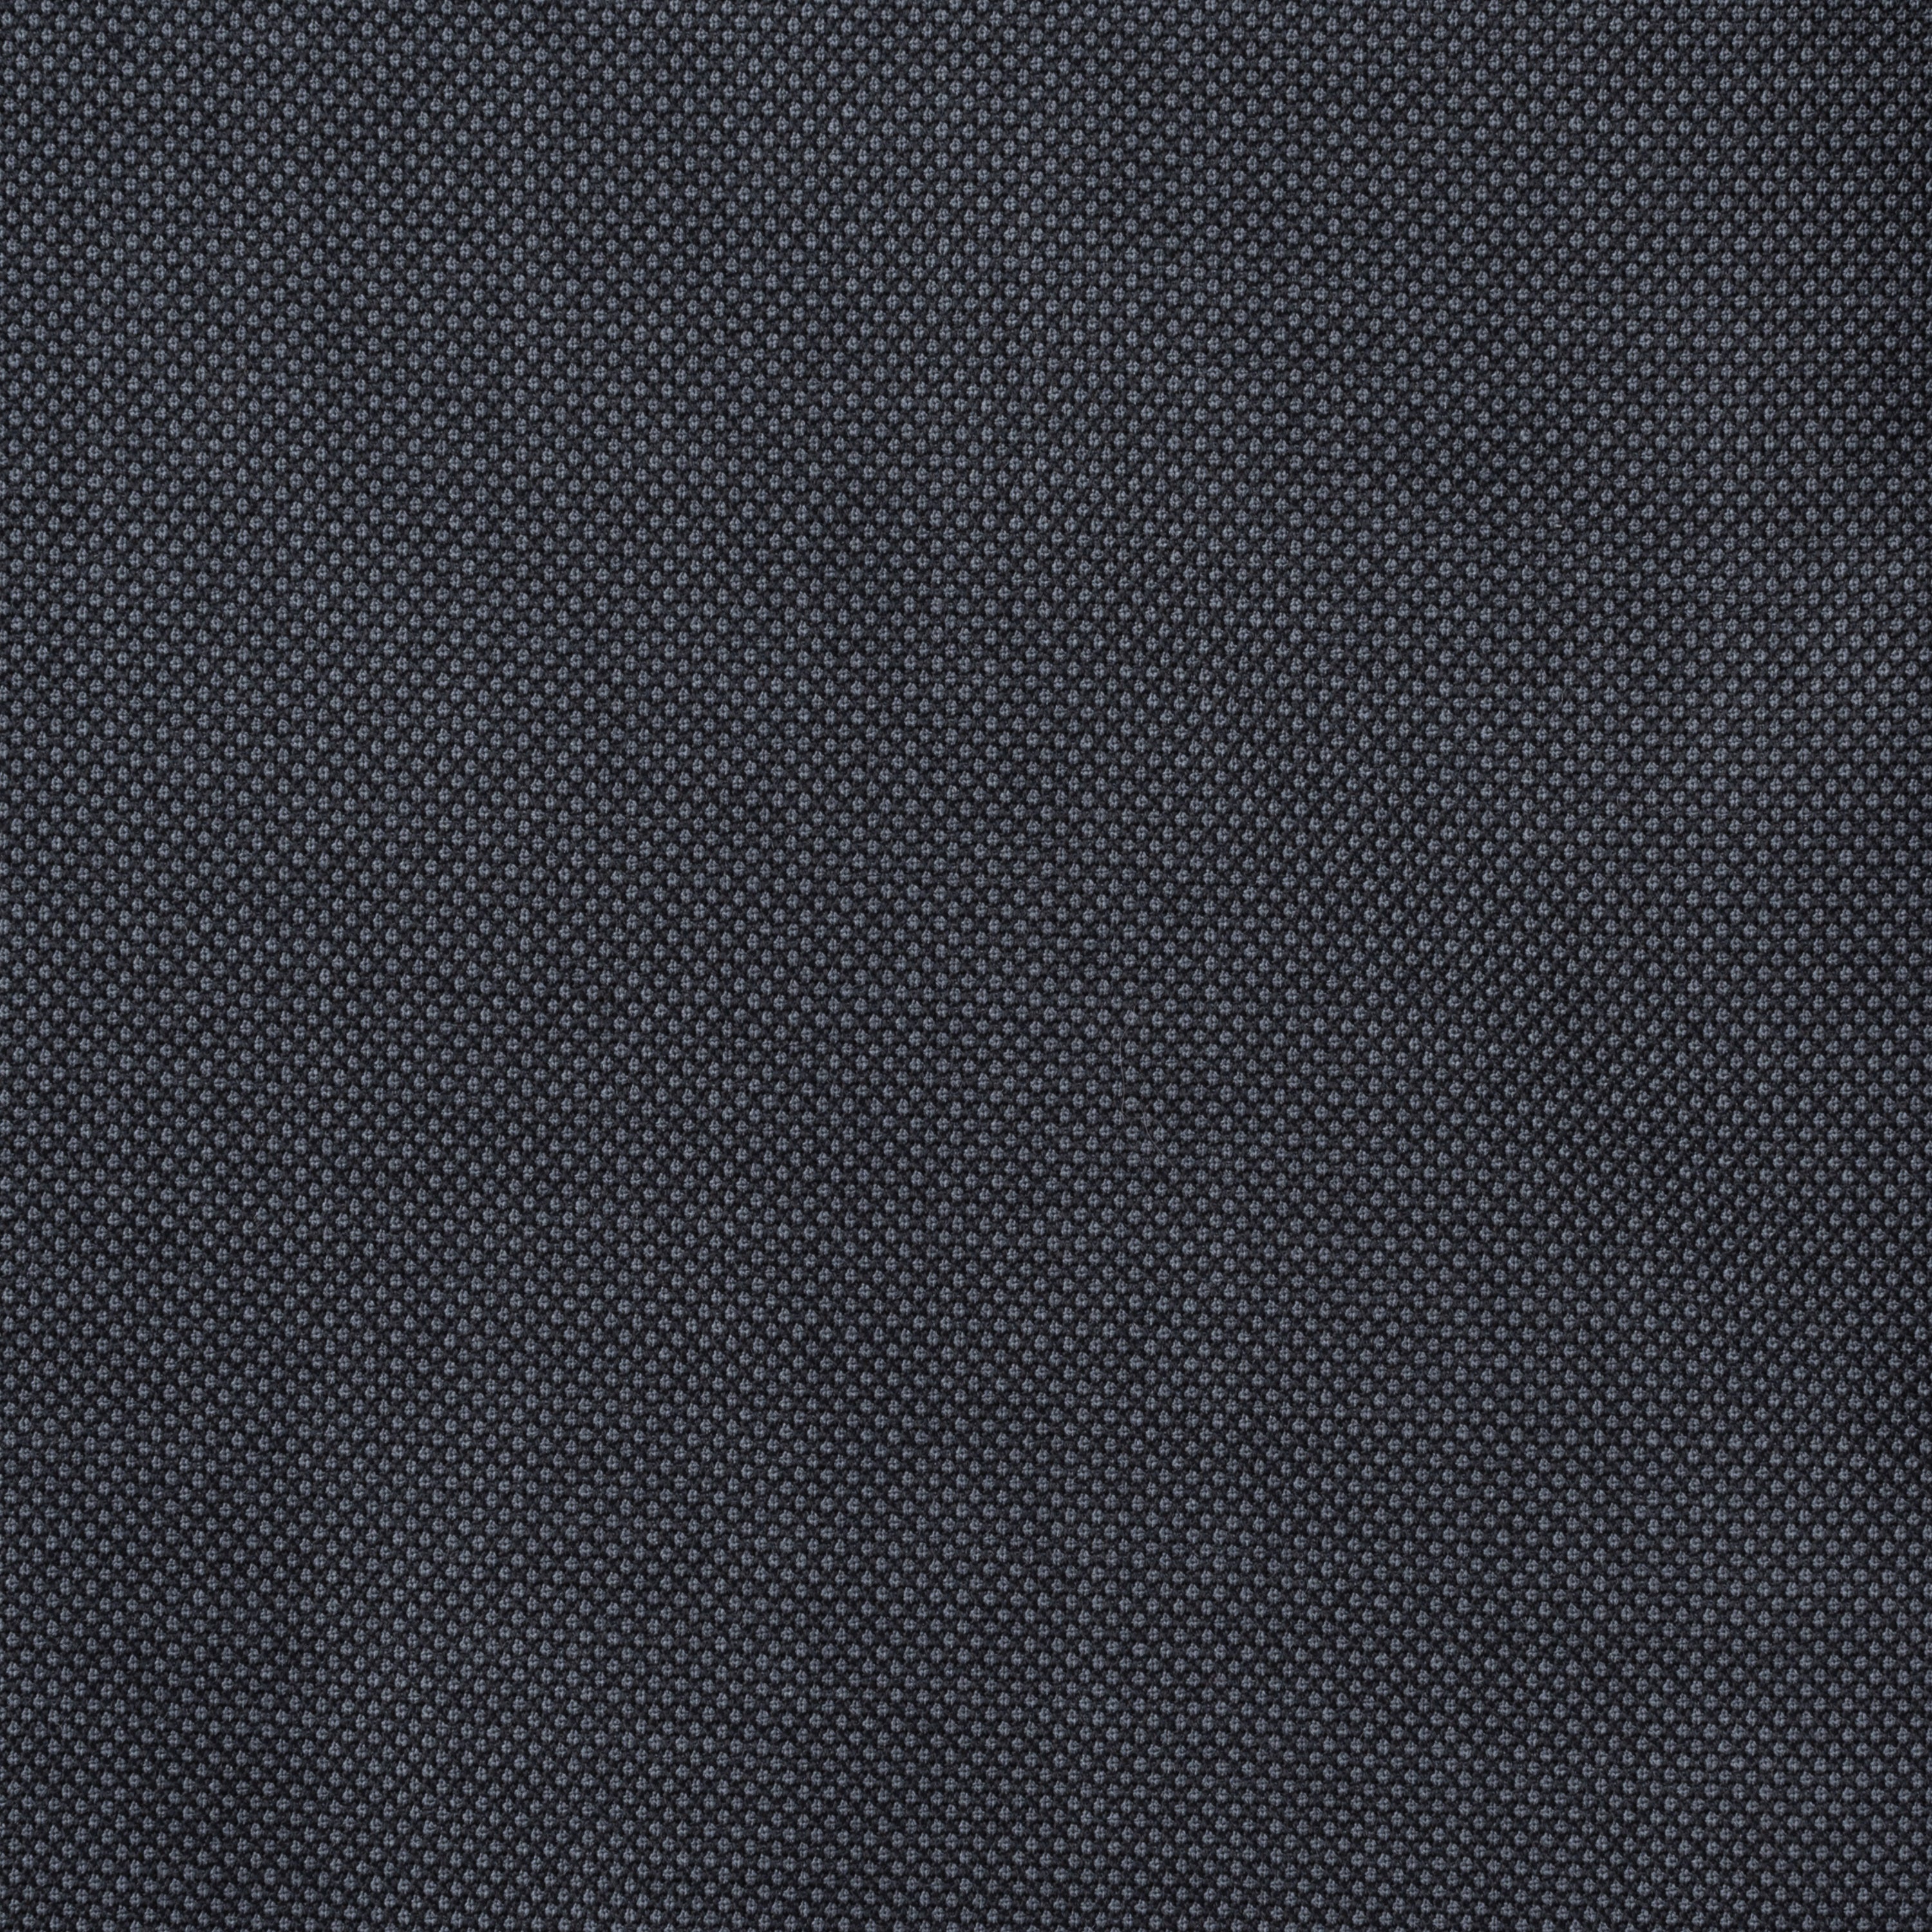 CASTANGIA 1850 for DIEGO DURINI Dark Gray Wool Jacket EU 48 NEW US 38 CASTANGIA